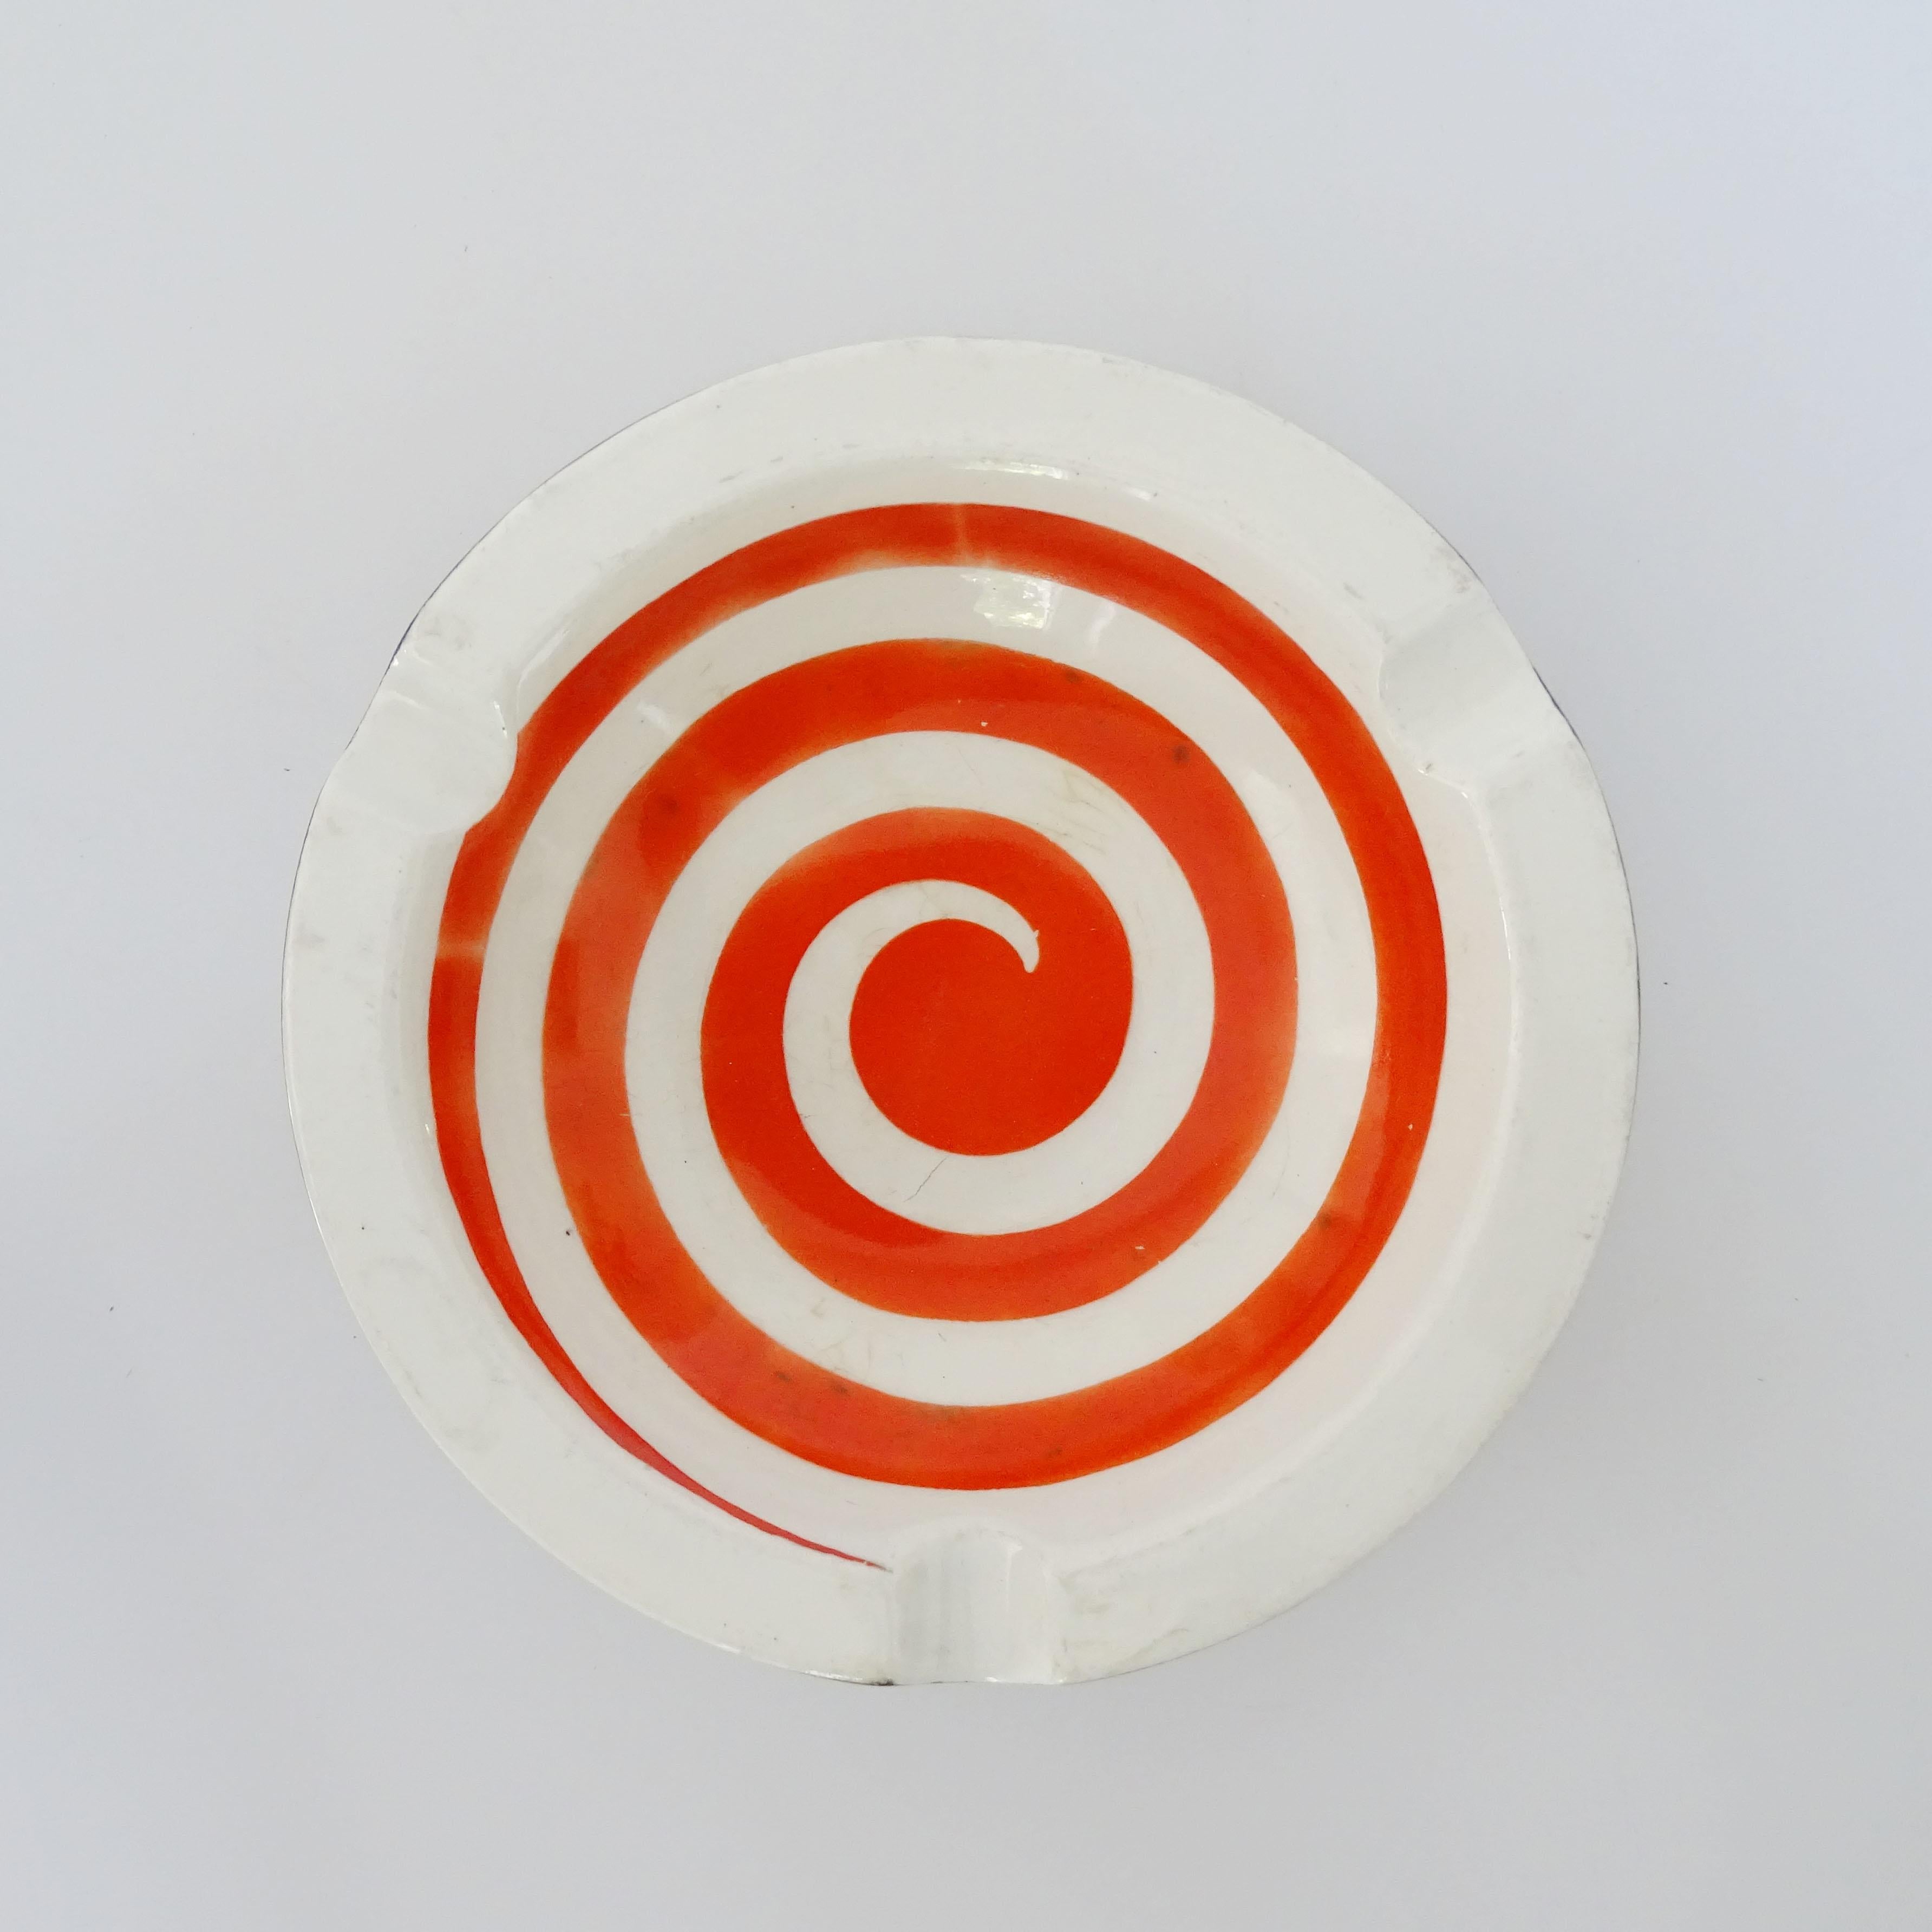 Nikolay Diulgheroff Art Deco ceramic ashtray for CORA vermouth, 
Pure Futuristic Graphics
Torino Italy 1930s
